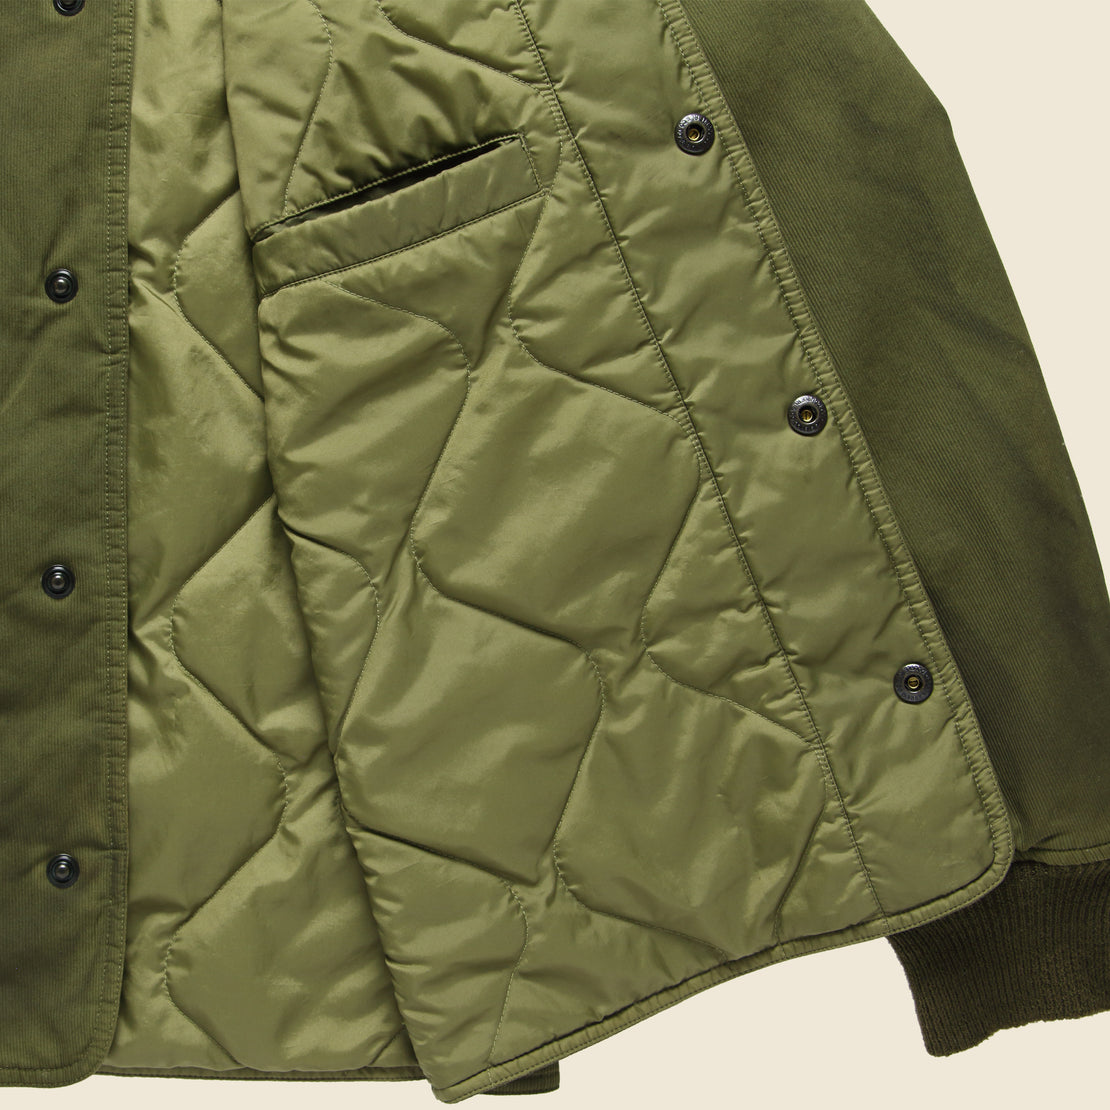 Stuart Jungle Cloth Jacket - Olive - RRL - STAG Provisions - Outerwear - Coat / Jacket